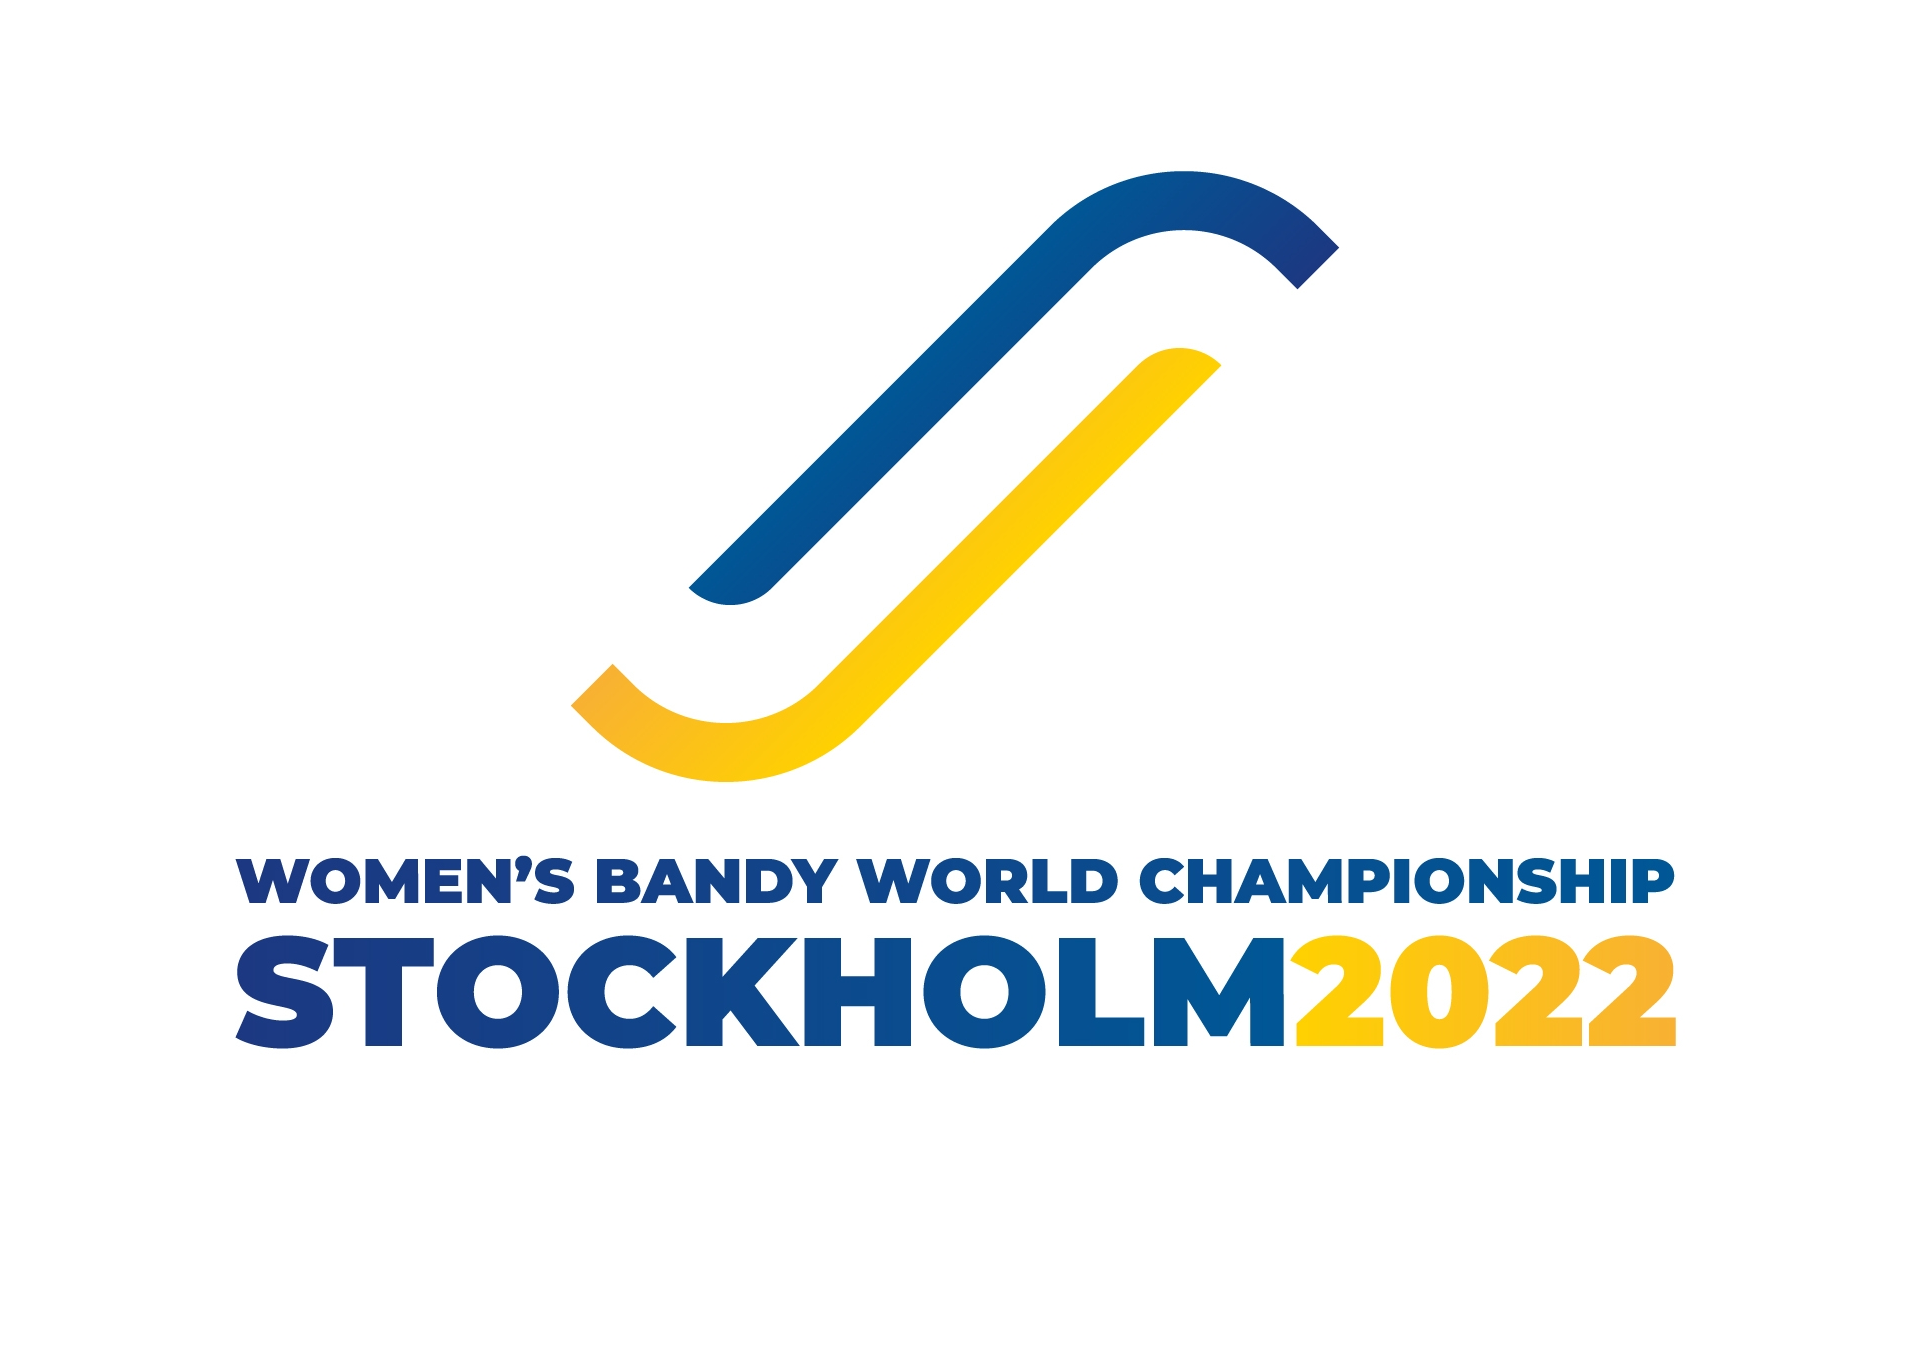 Stockholm will host next year's Women's Bandy World Championships ©FIB